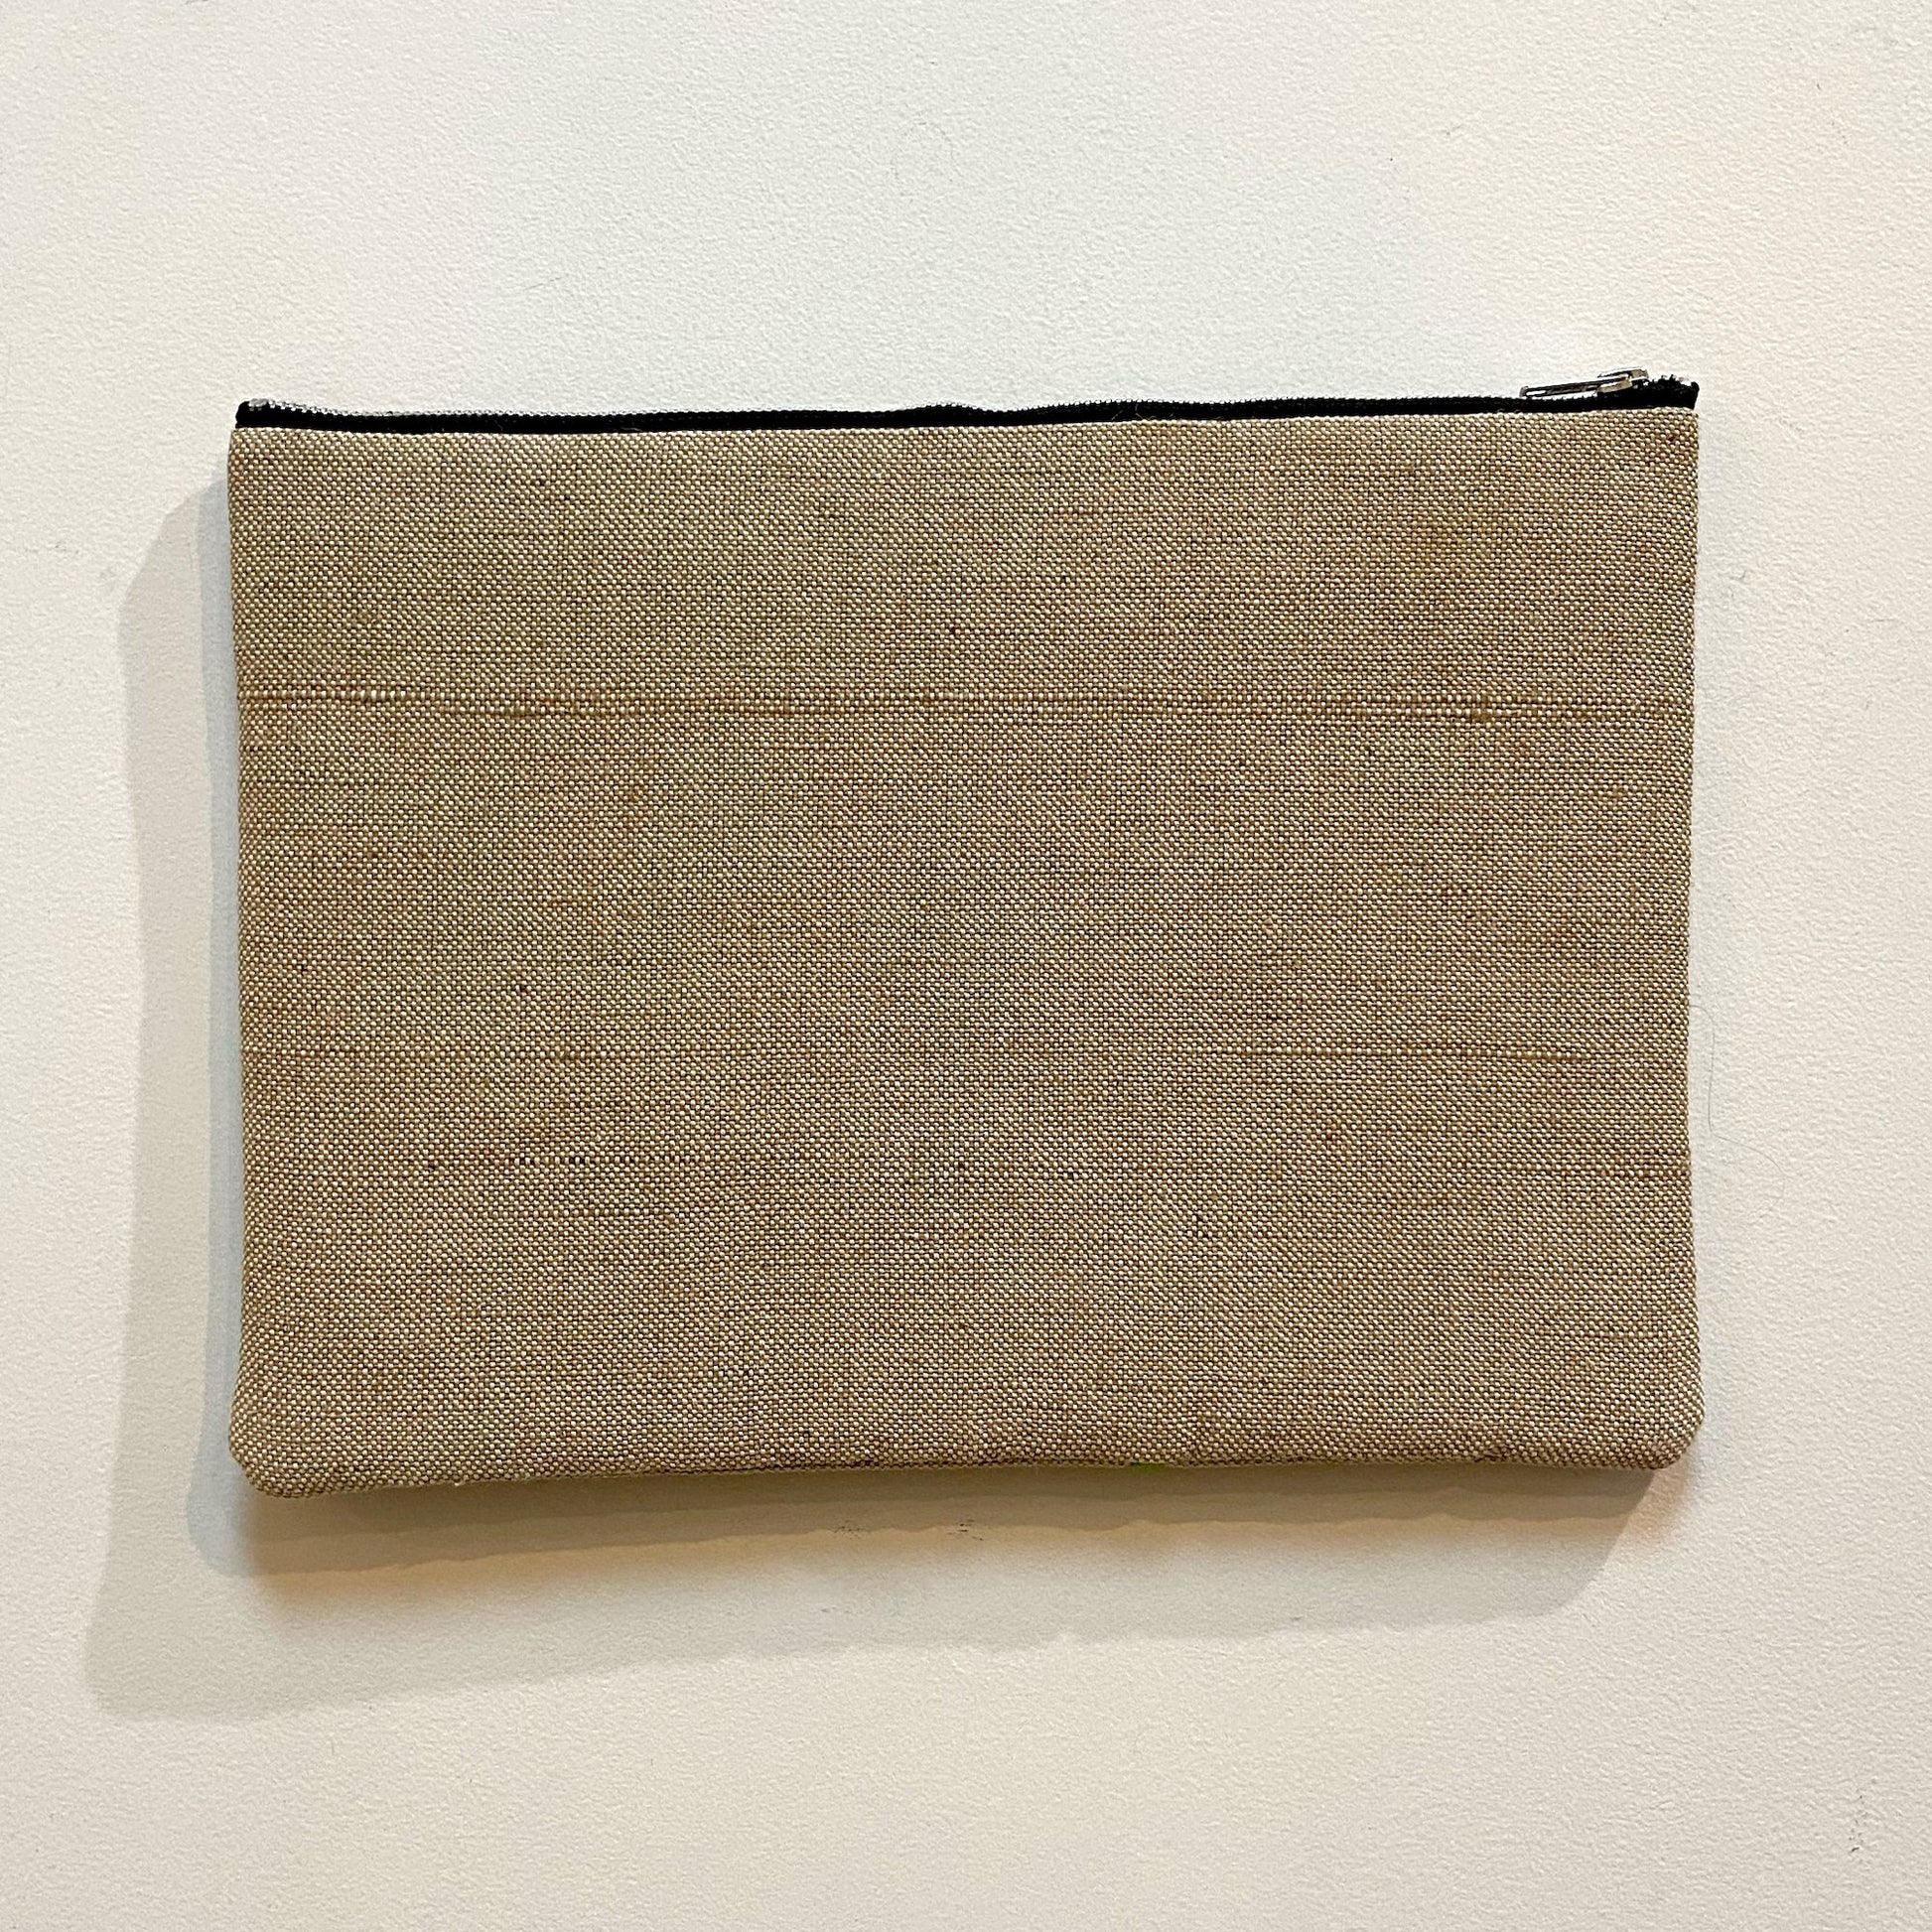 Gumnut Leaf Laptop Wallet in Lime Bags and purses WEFTshop 